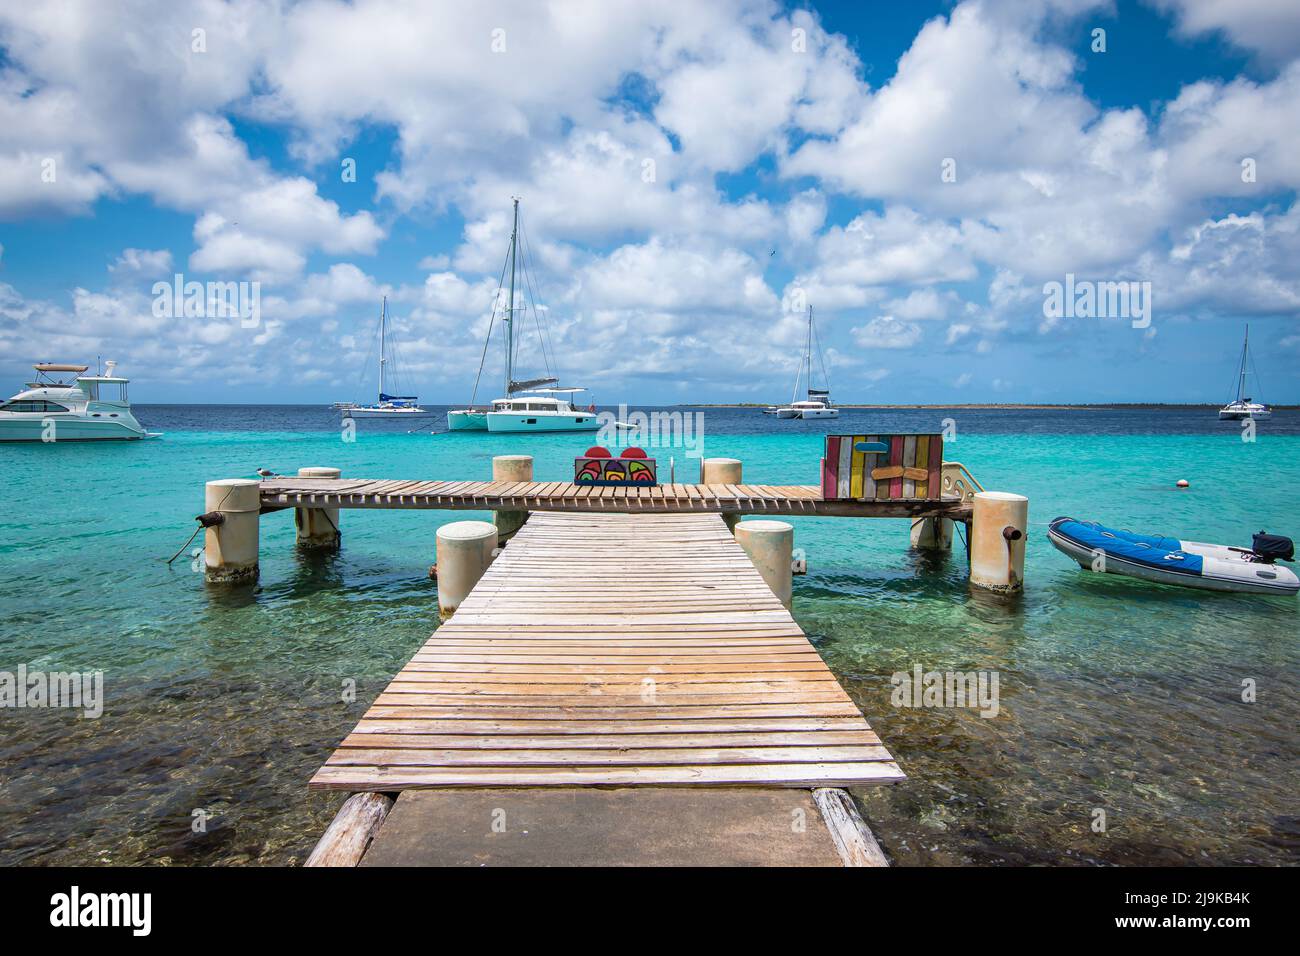 Molo di legno a Kralendijk, Bonaire, Caraibi Paesi Bassi. Foto Stock